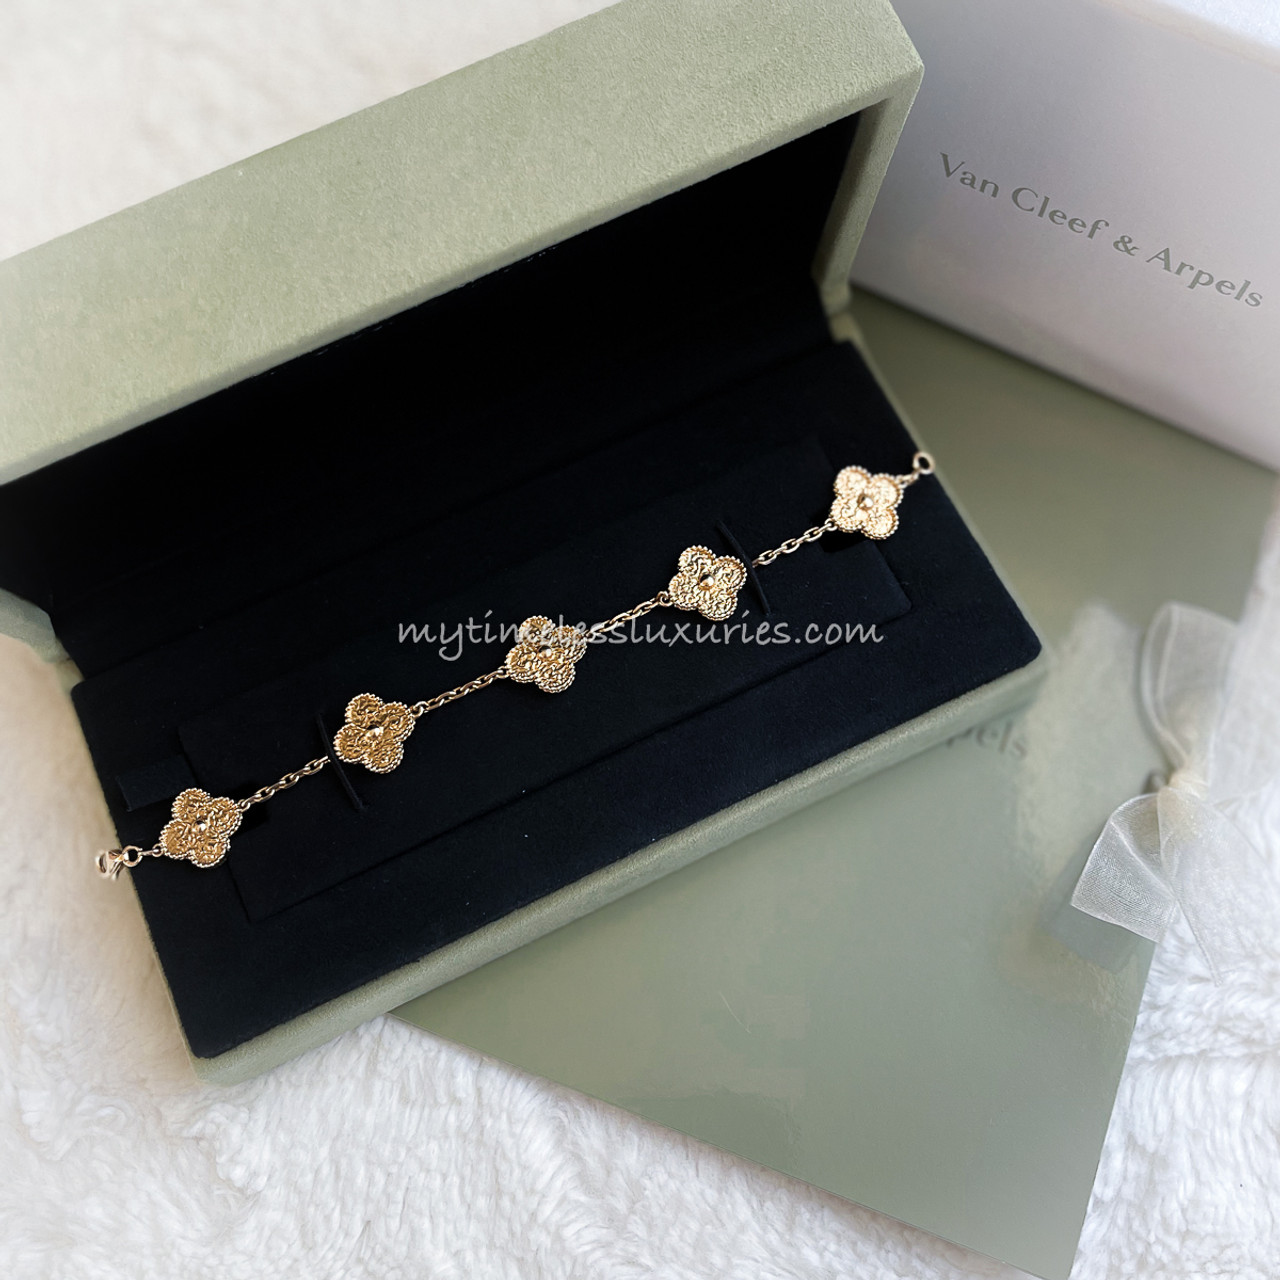 Vintage Van Cleef & Arpels Alhambra Bracelet, 5 Motifs